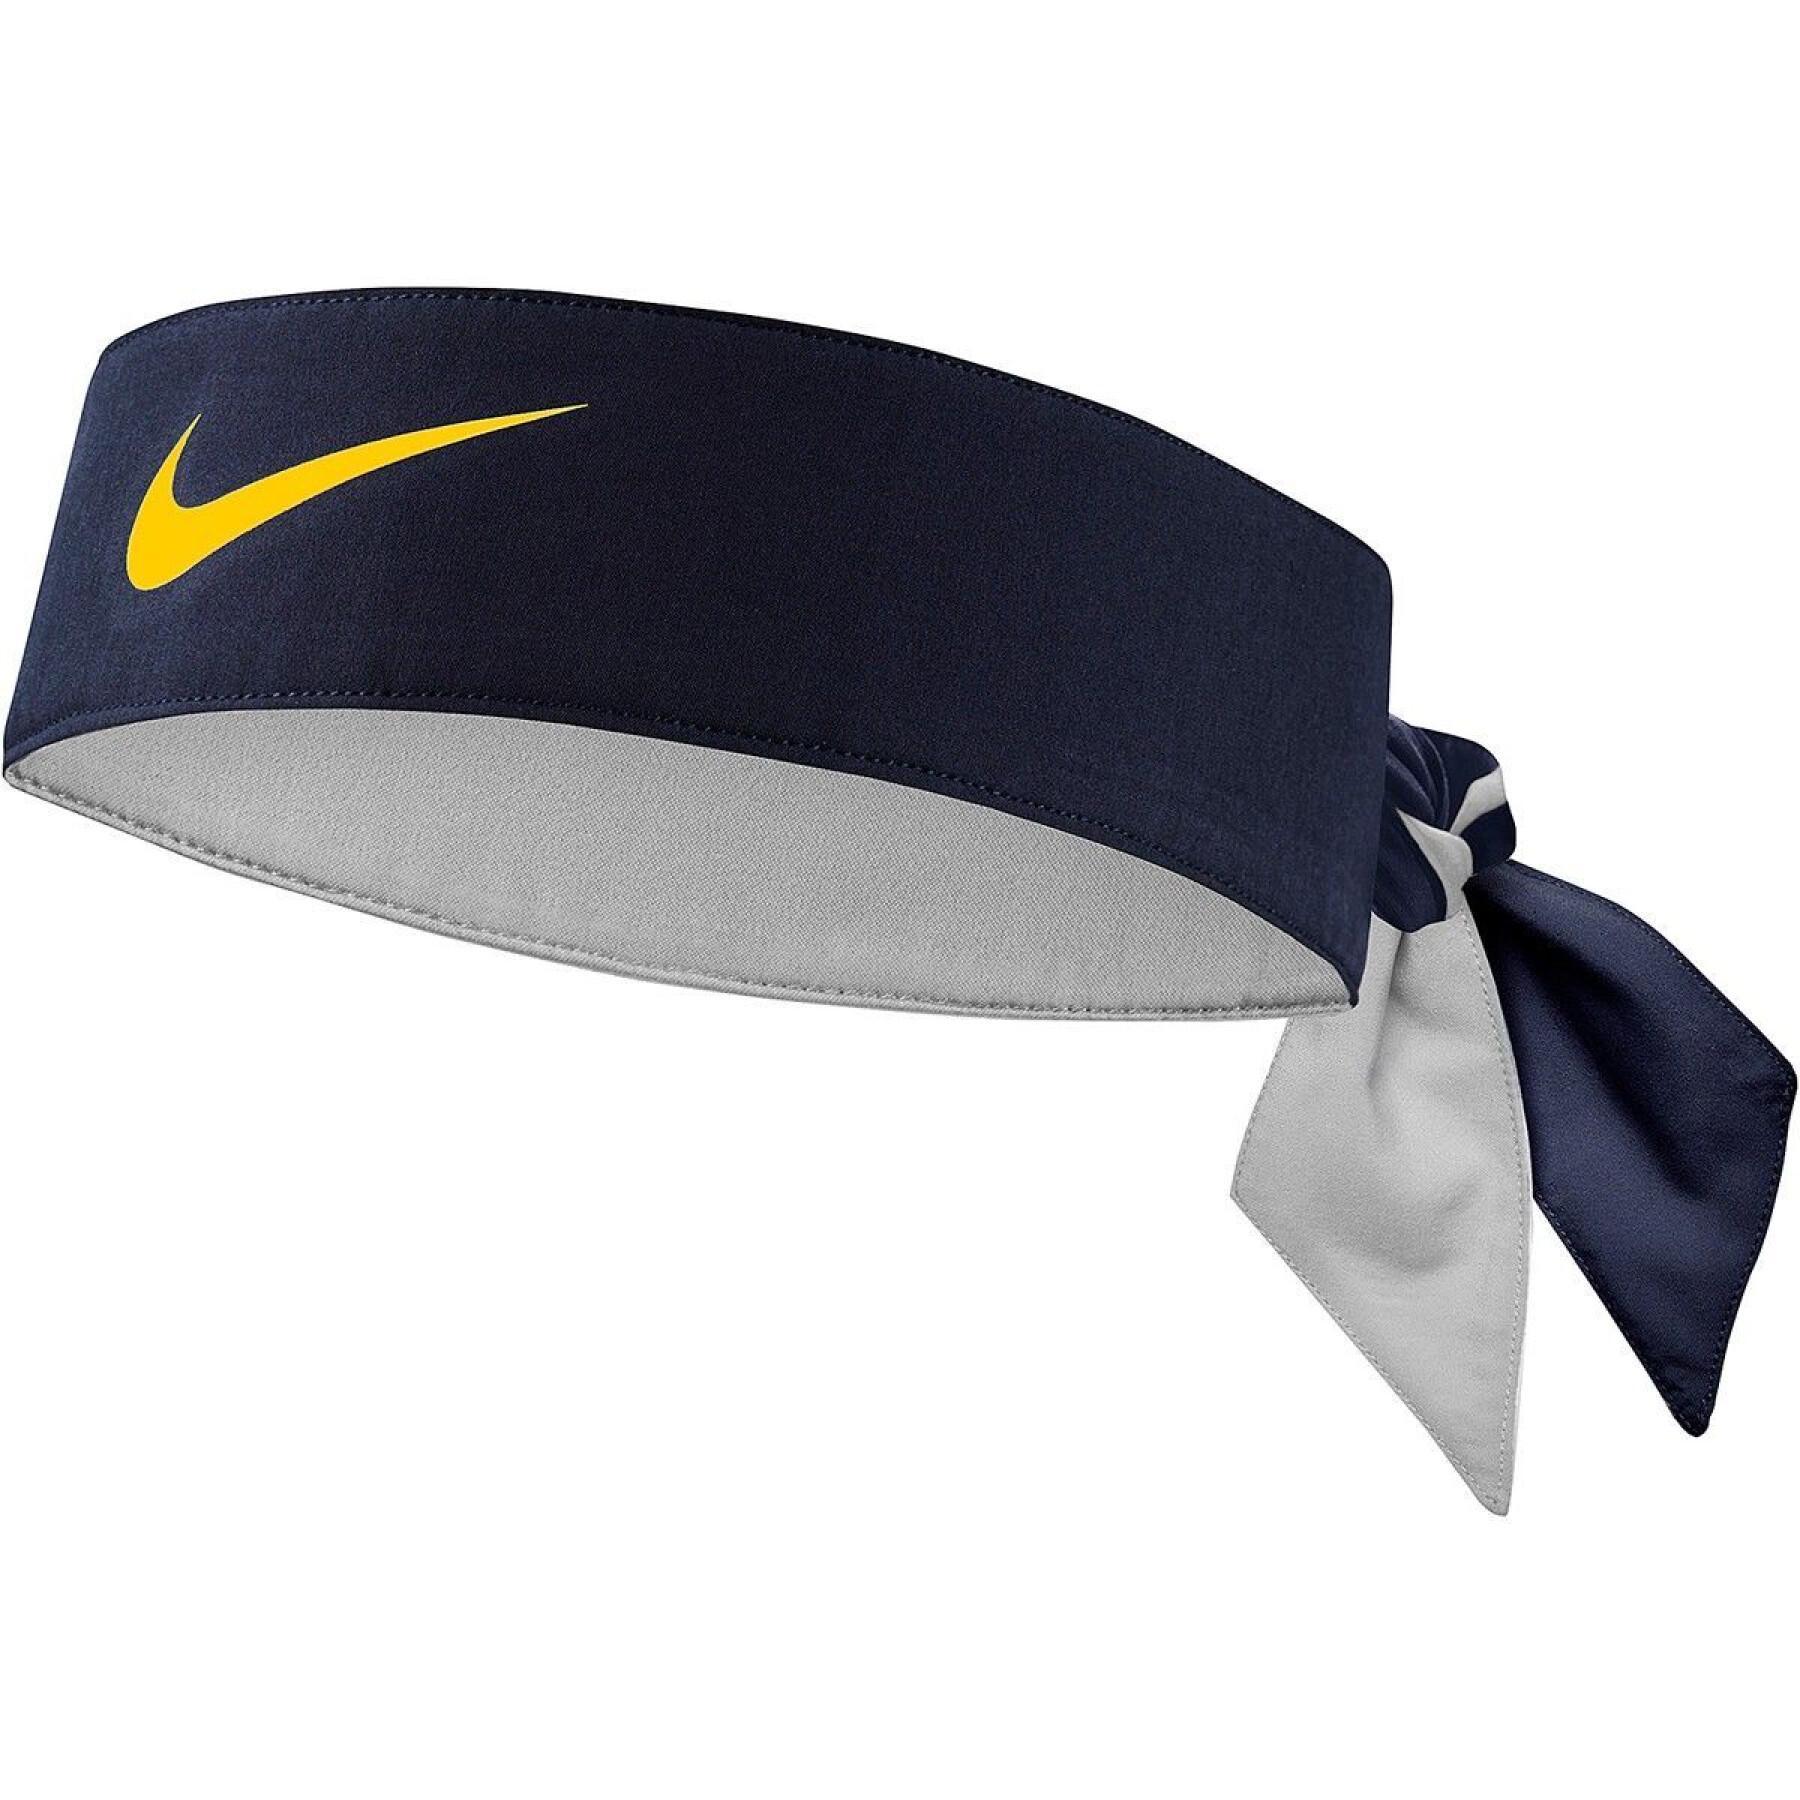 Headband Nike tennis premier Nadal